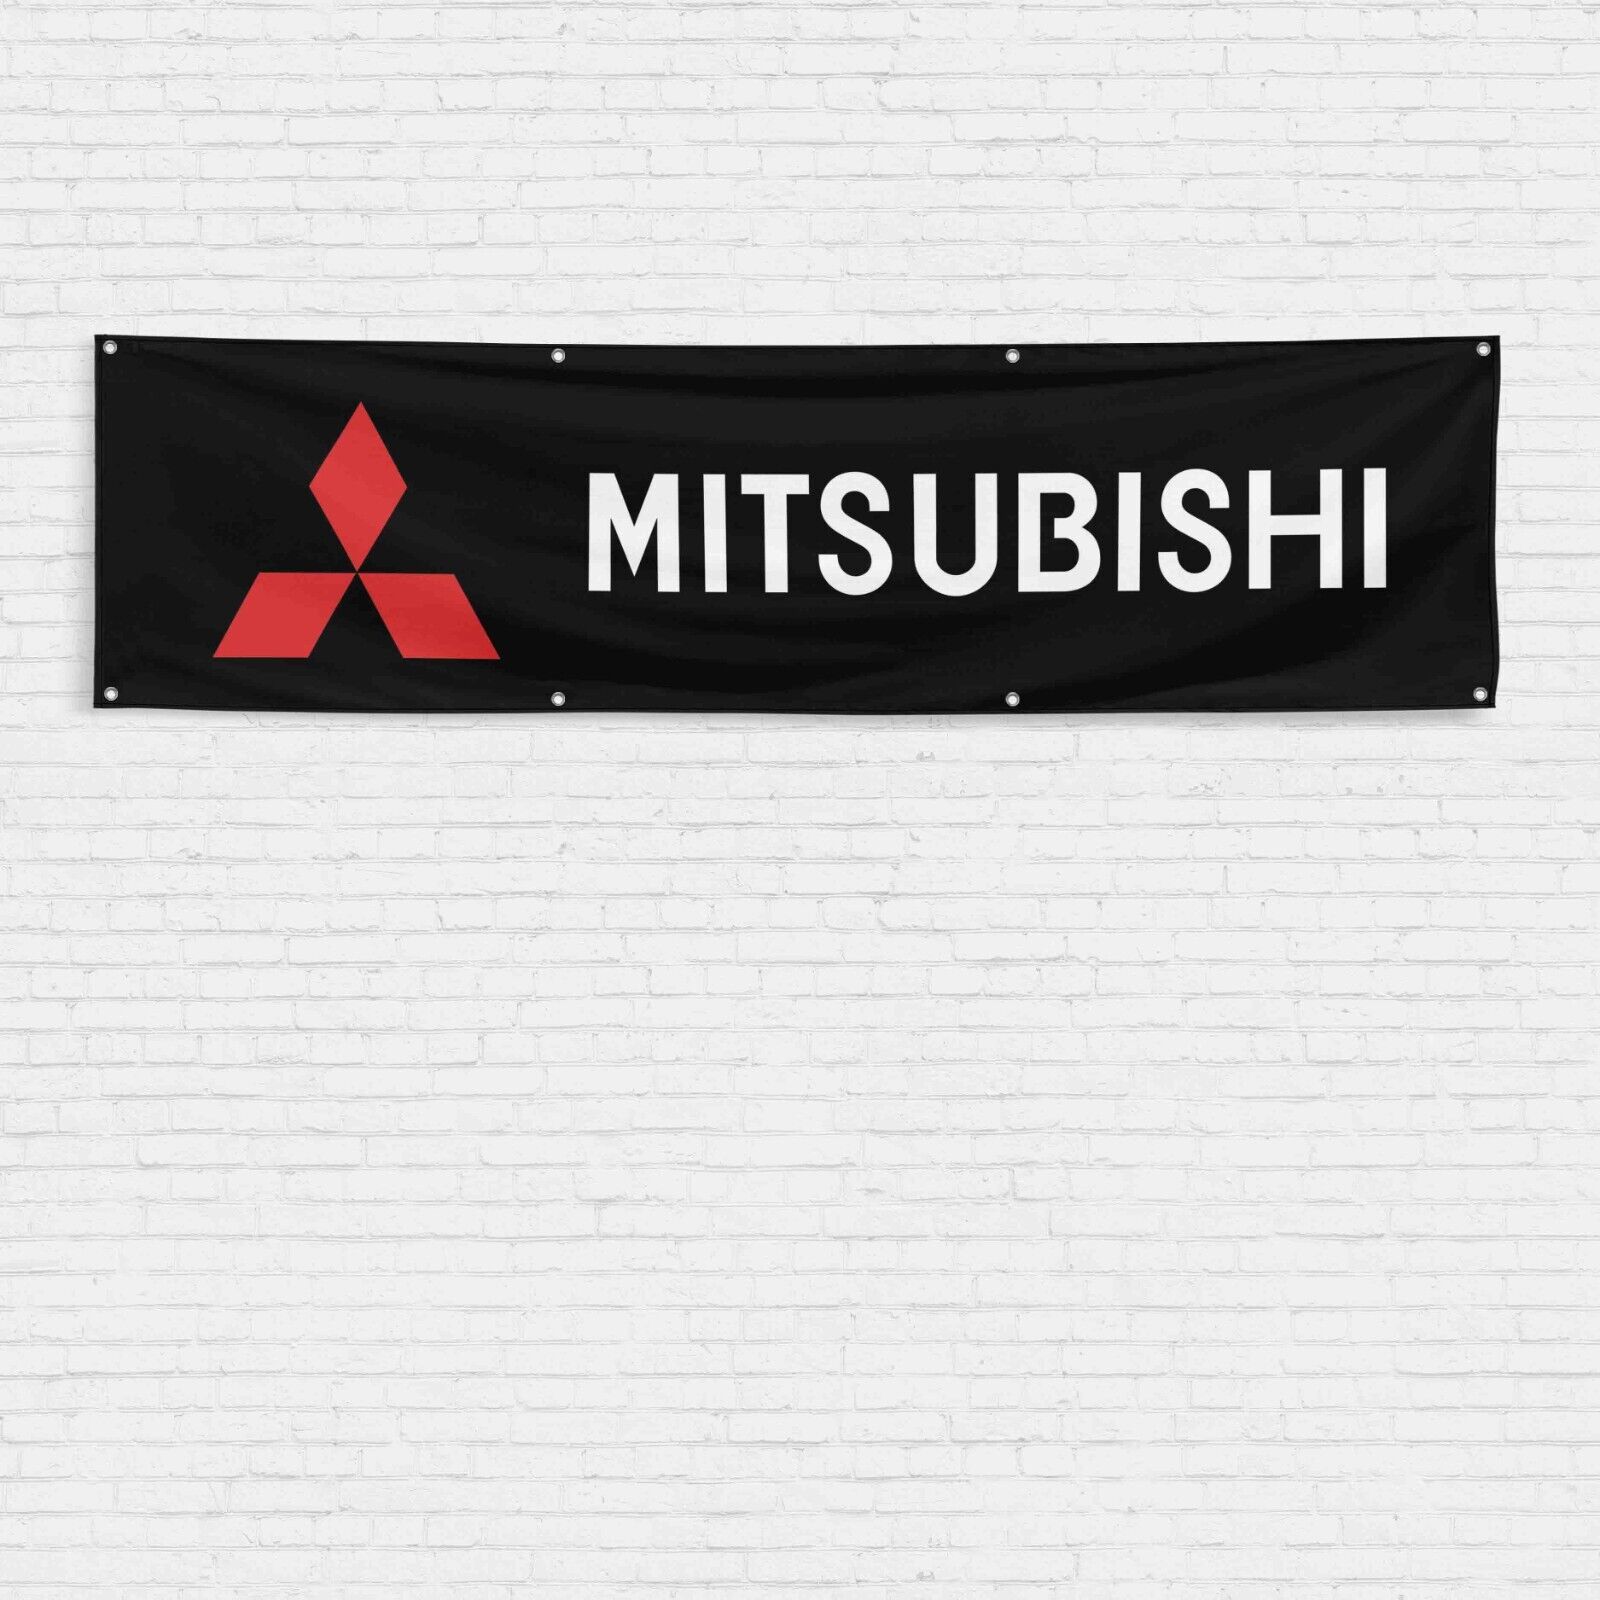 For Mitsubishi Car Enthusiast 2x8 ft Flag JDM Ralliart Lancer EVO Car Banner